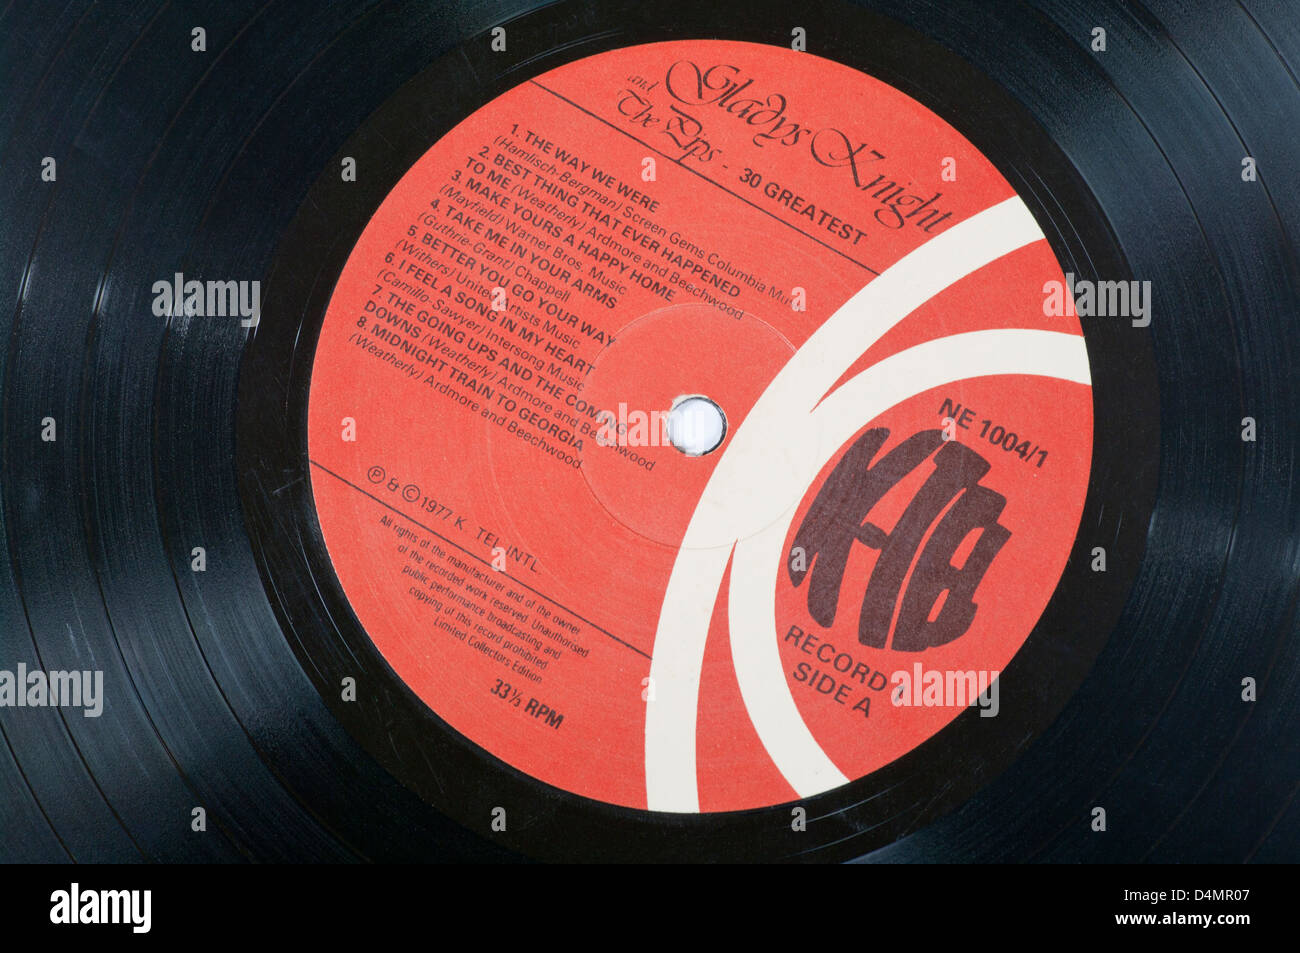 K-Tel Record Label On A Vinyl LP Record Stock Photo